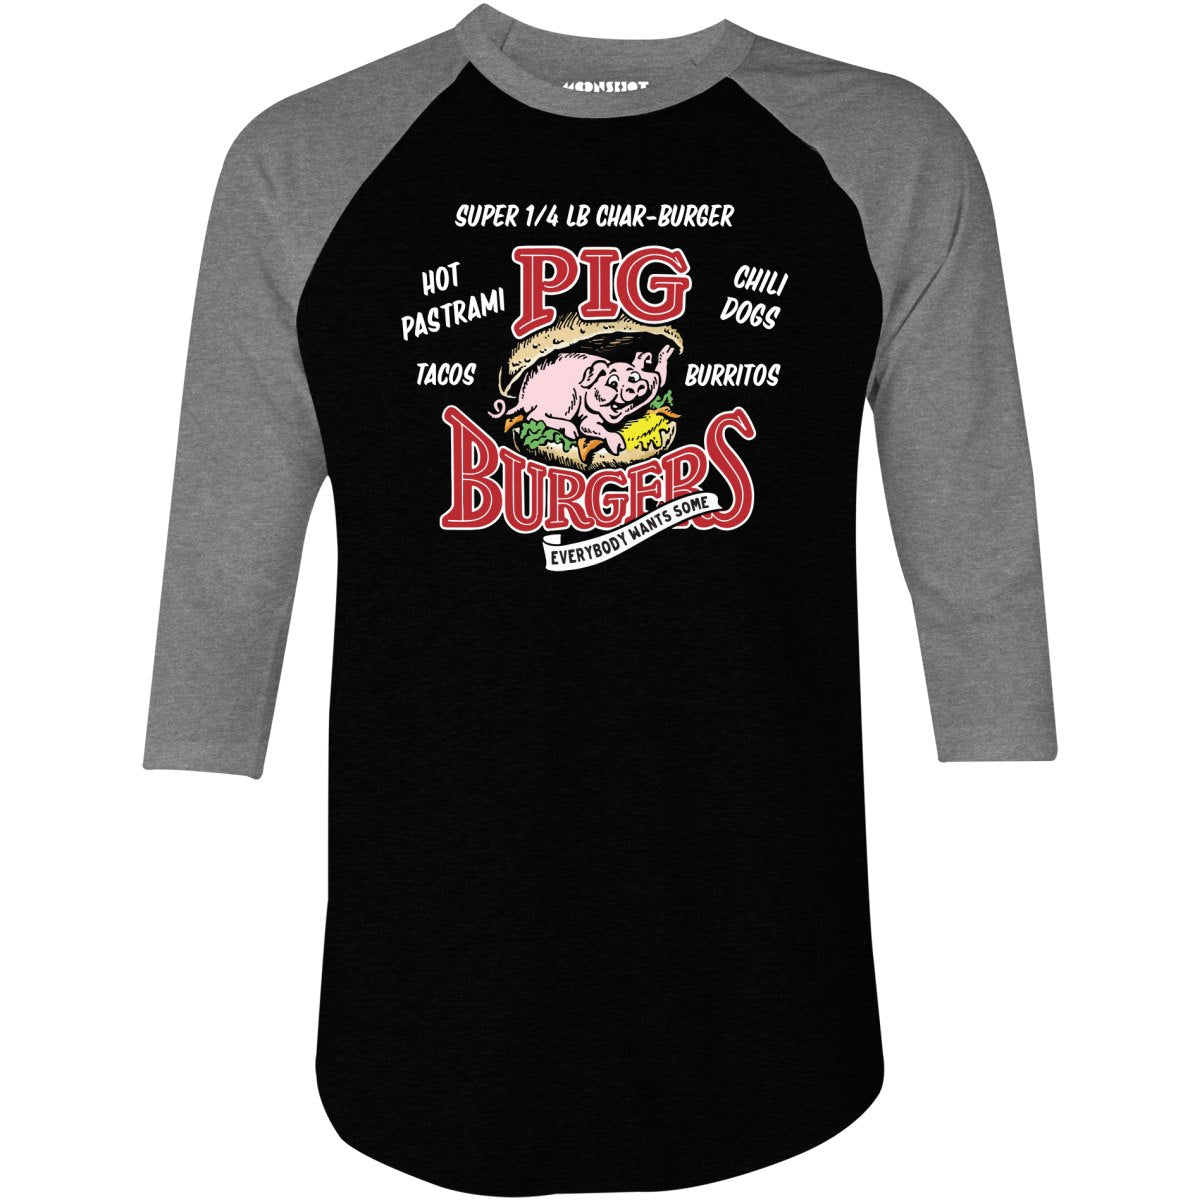 Pig Burgers - Everybody Wants Some - 3/4 Sleeve Raglan T-Shirt